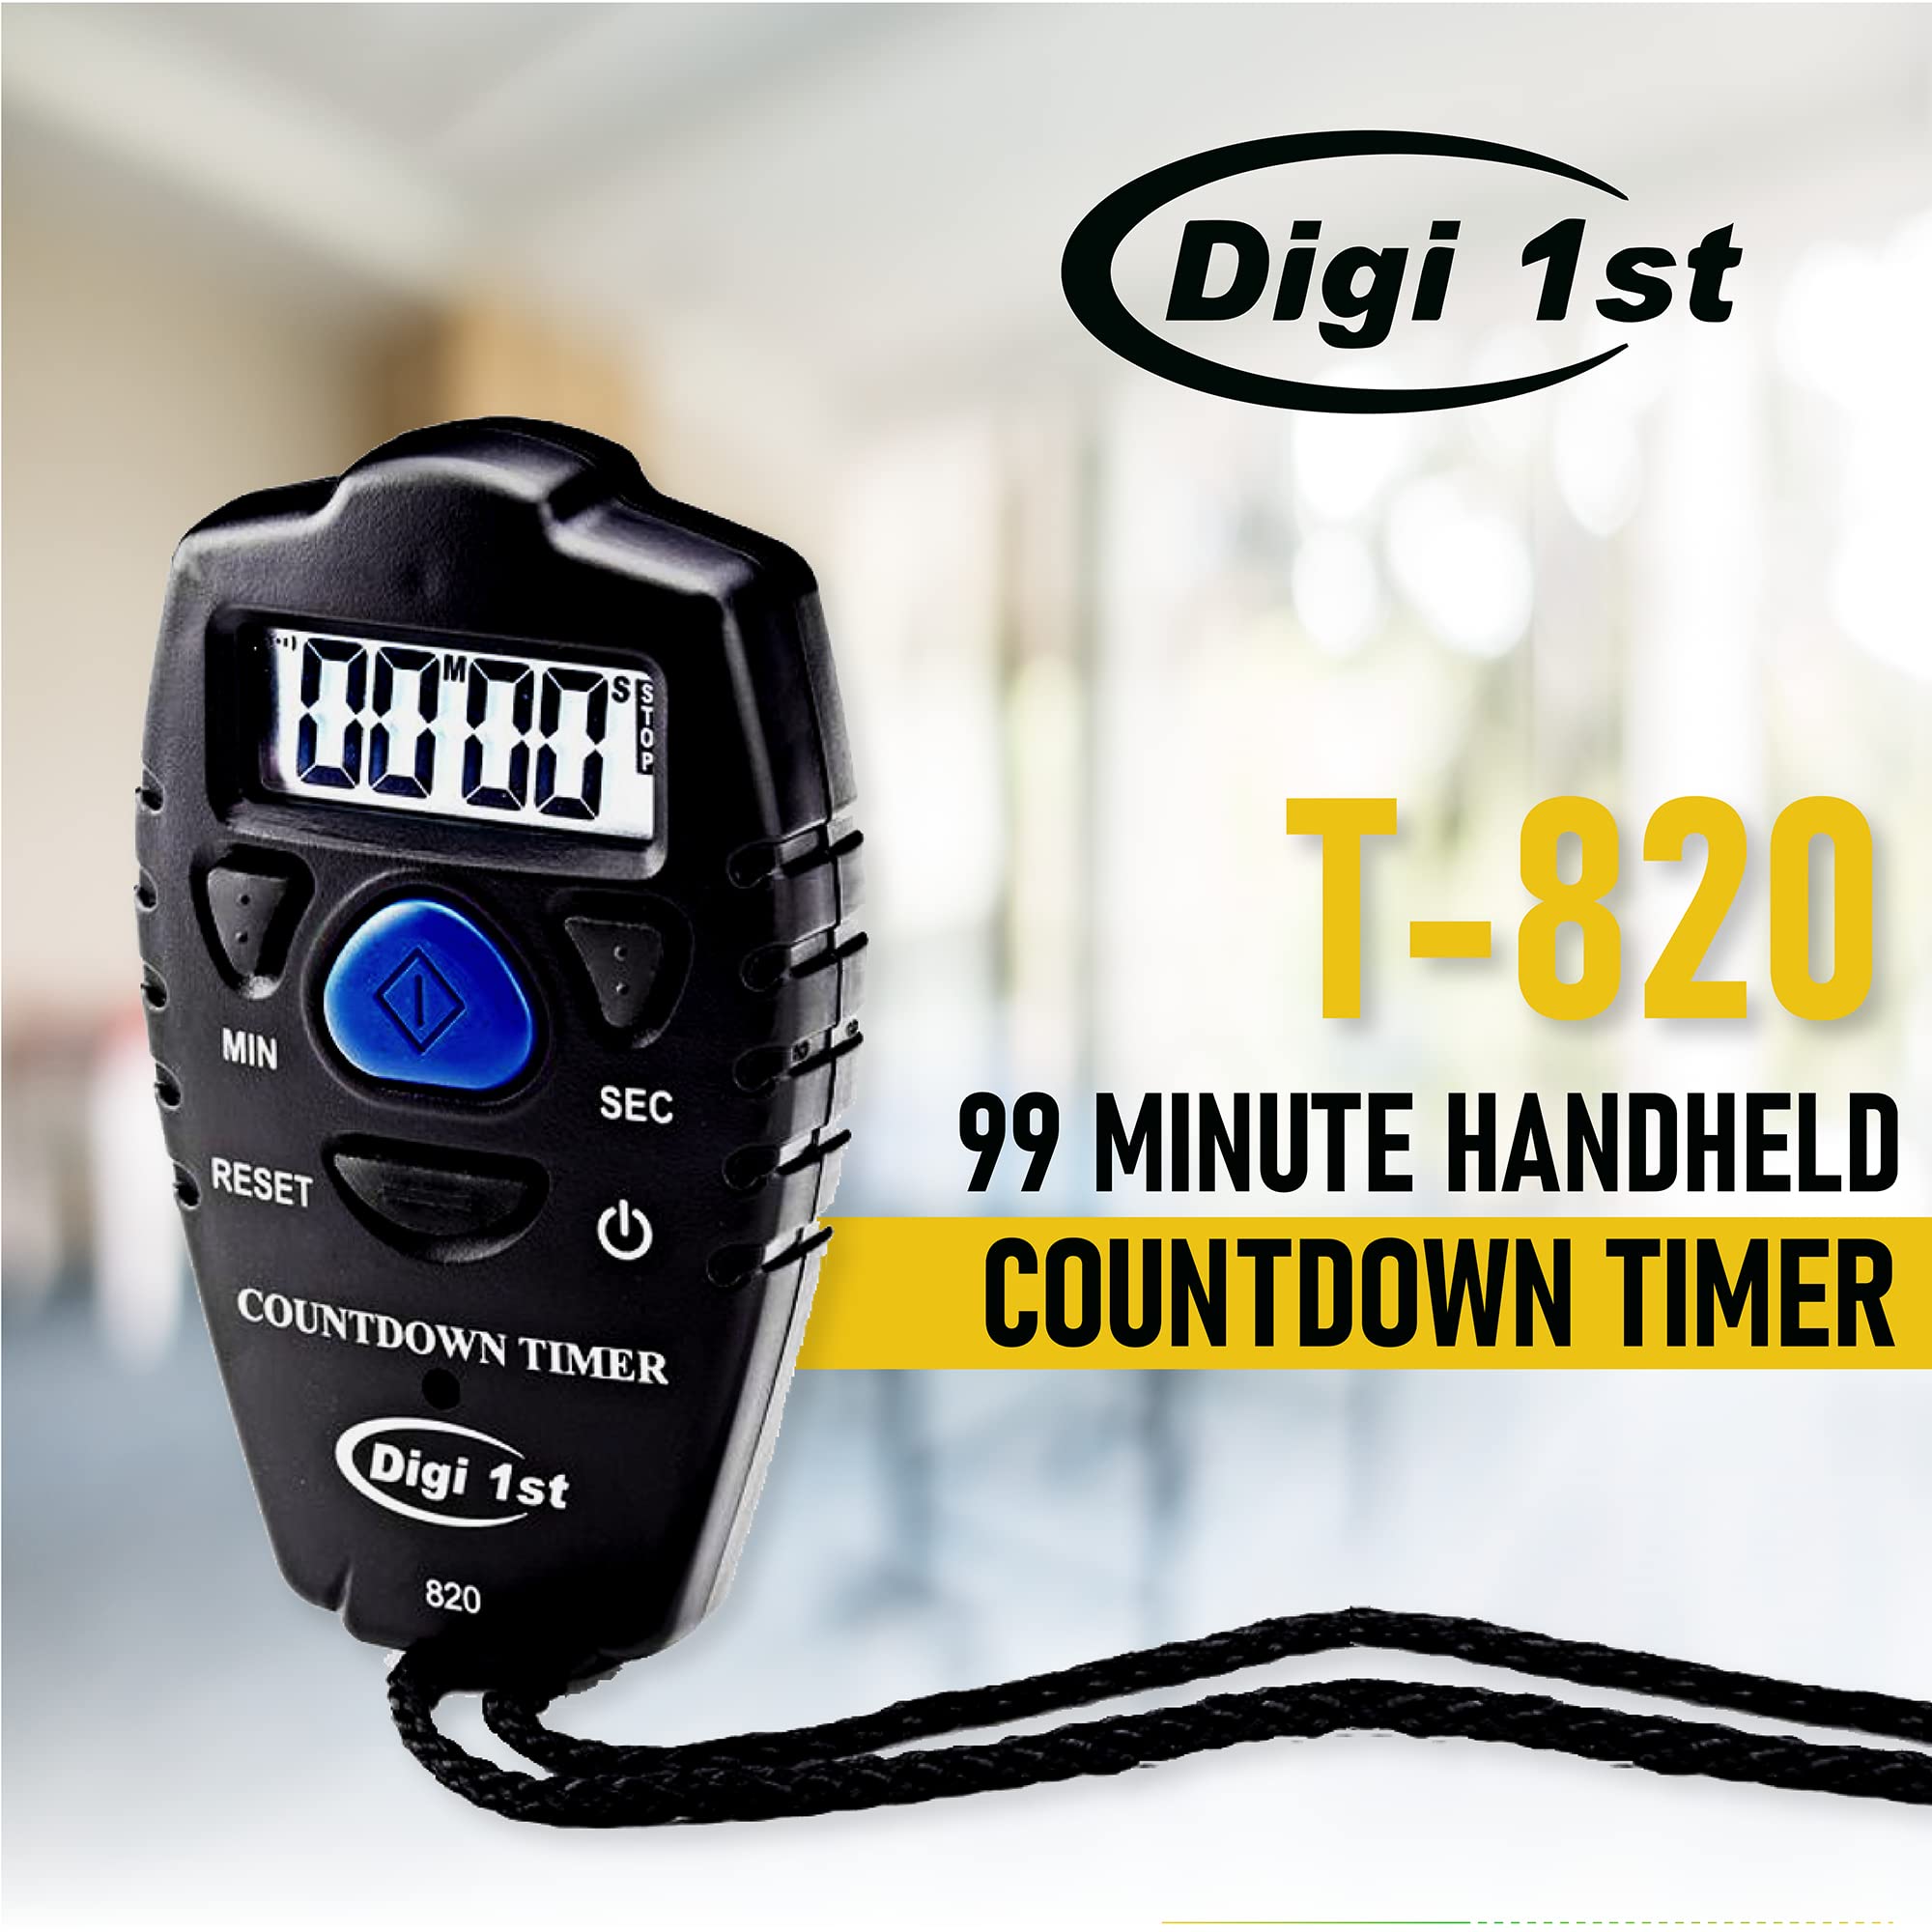 Digi 1st T-820 99 Minute Handheld Countdown Timer Black